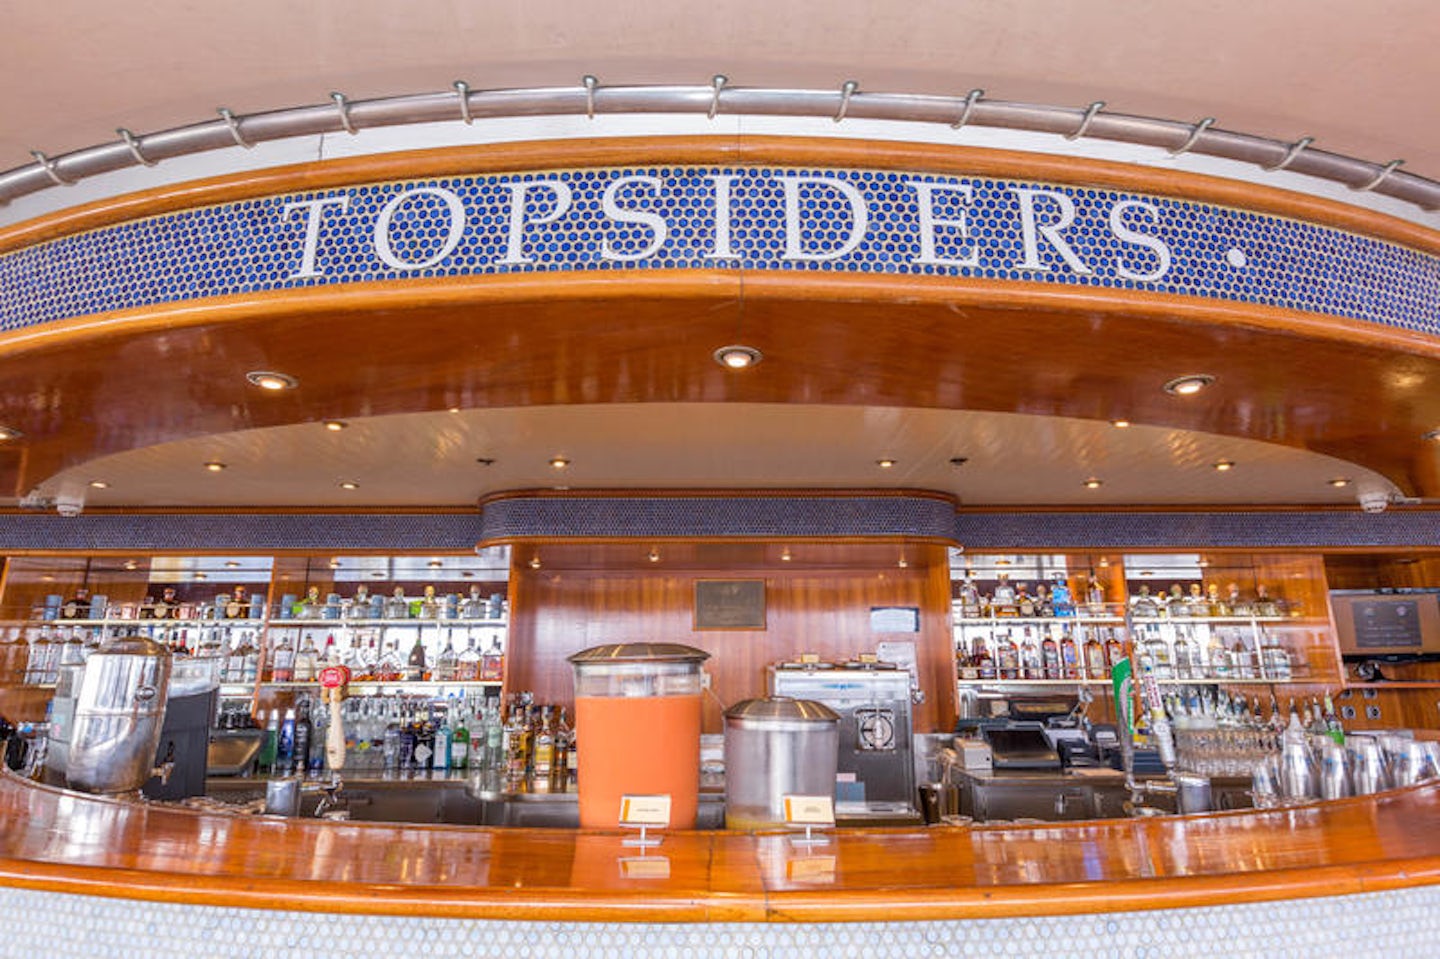 Topsiders Bar on Norwegian Sun